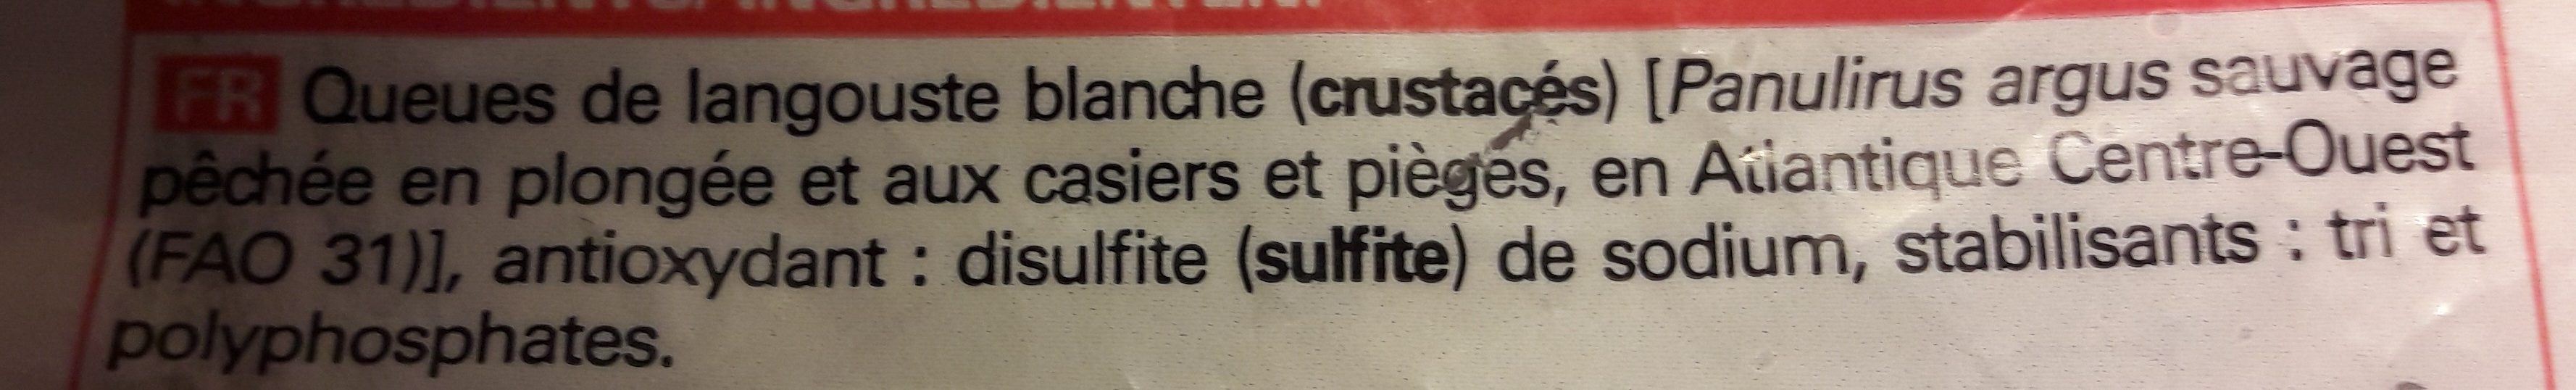 Queues de langouste blanche crues - Ingredients - fr